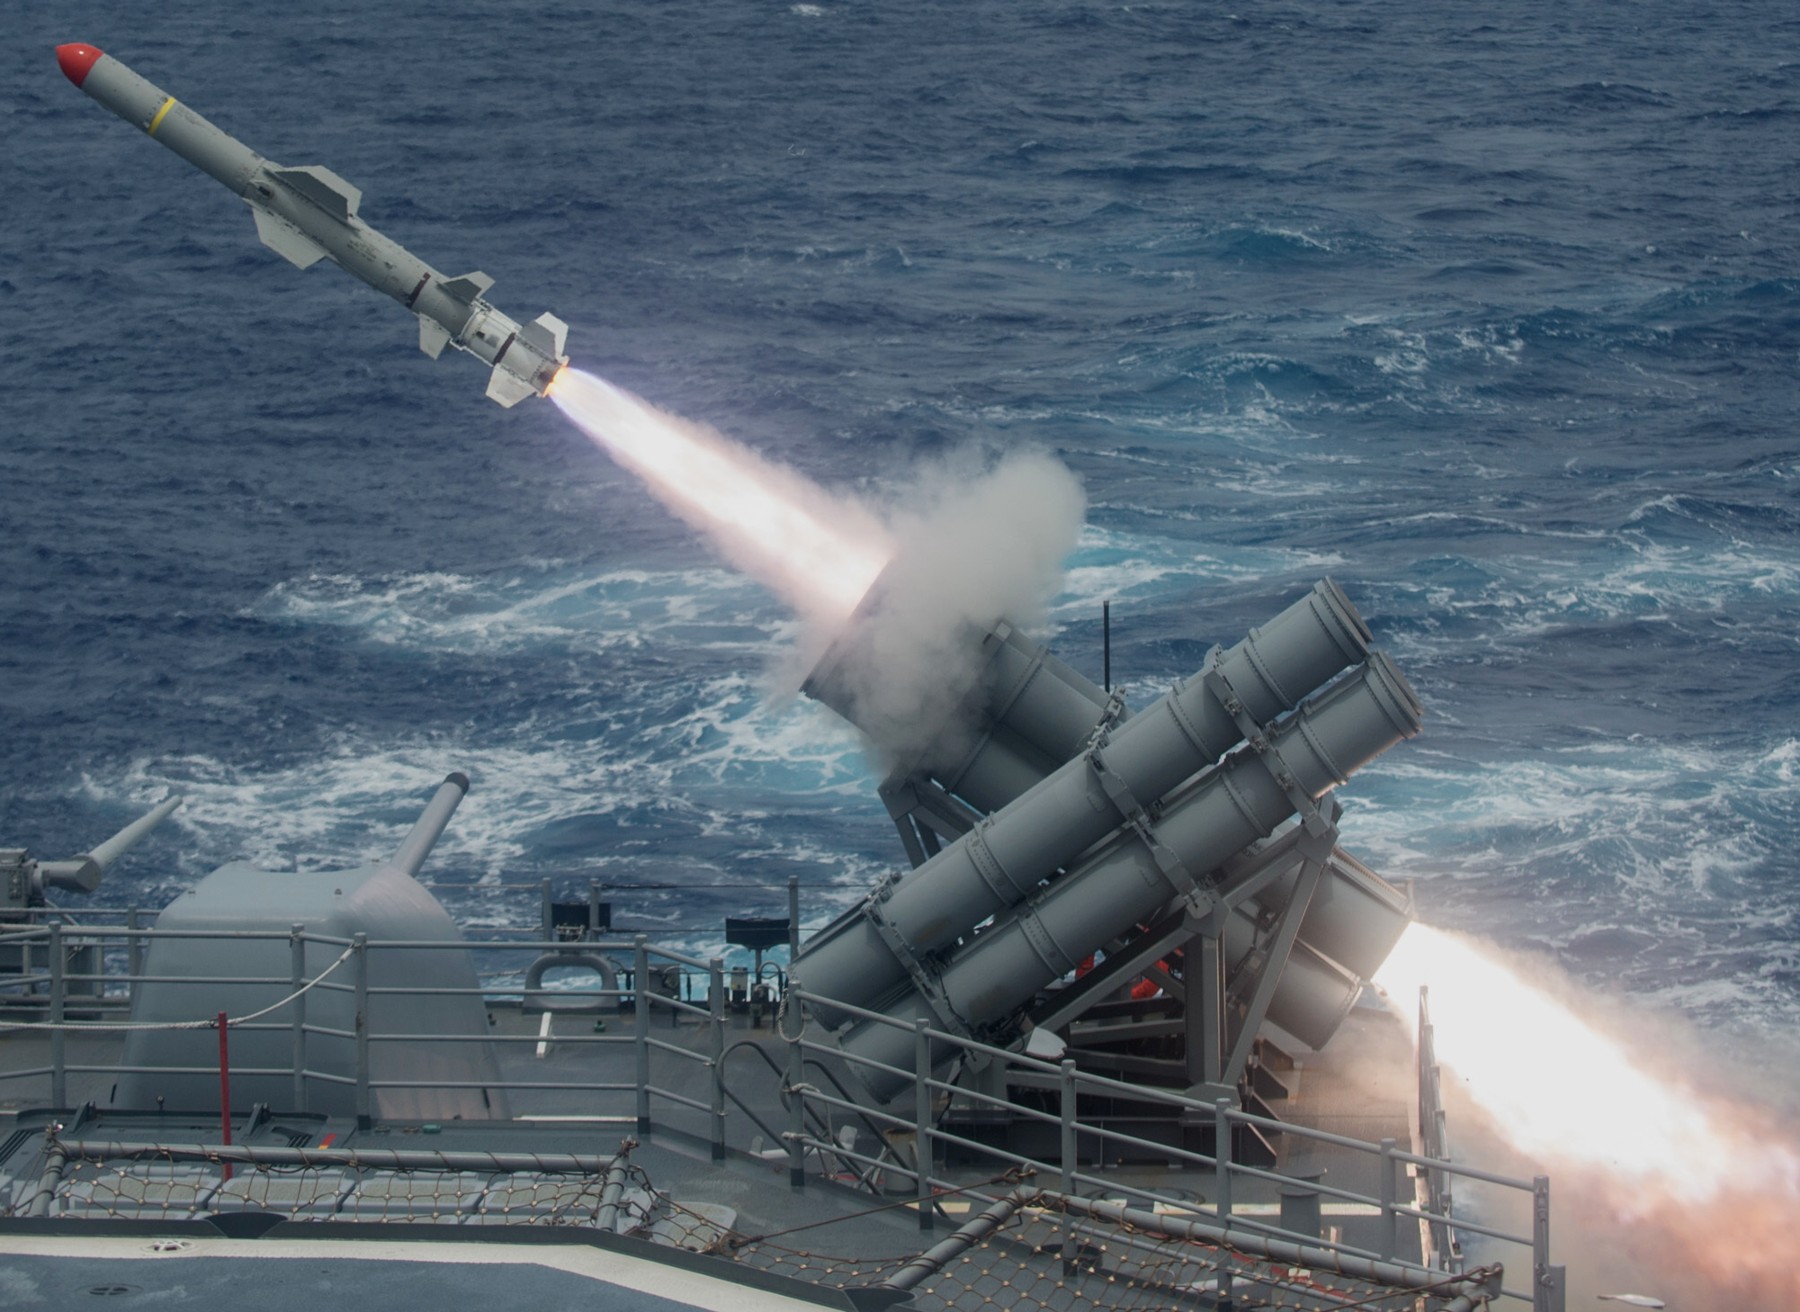 cg-67 uss shiloh ticonderoga class guided missile cruiser aegis us navy rgm-84 harpoon ssm 32